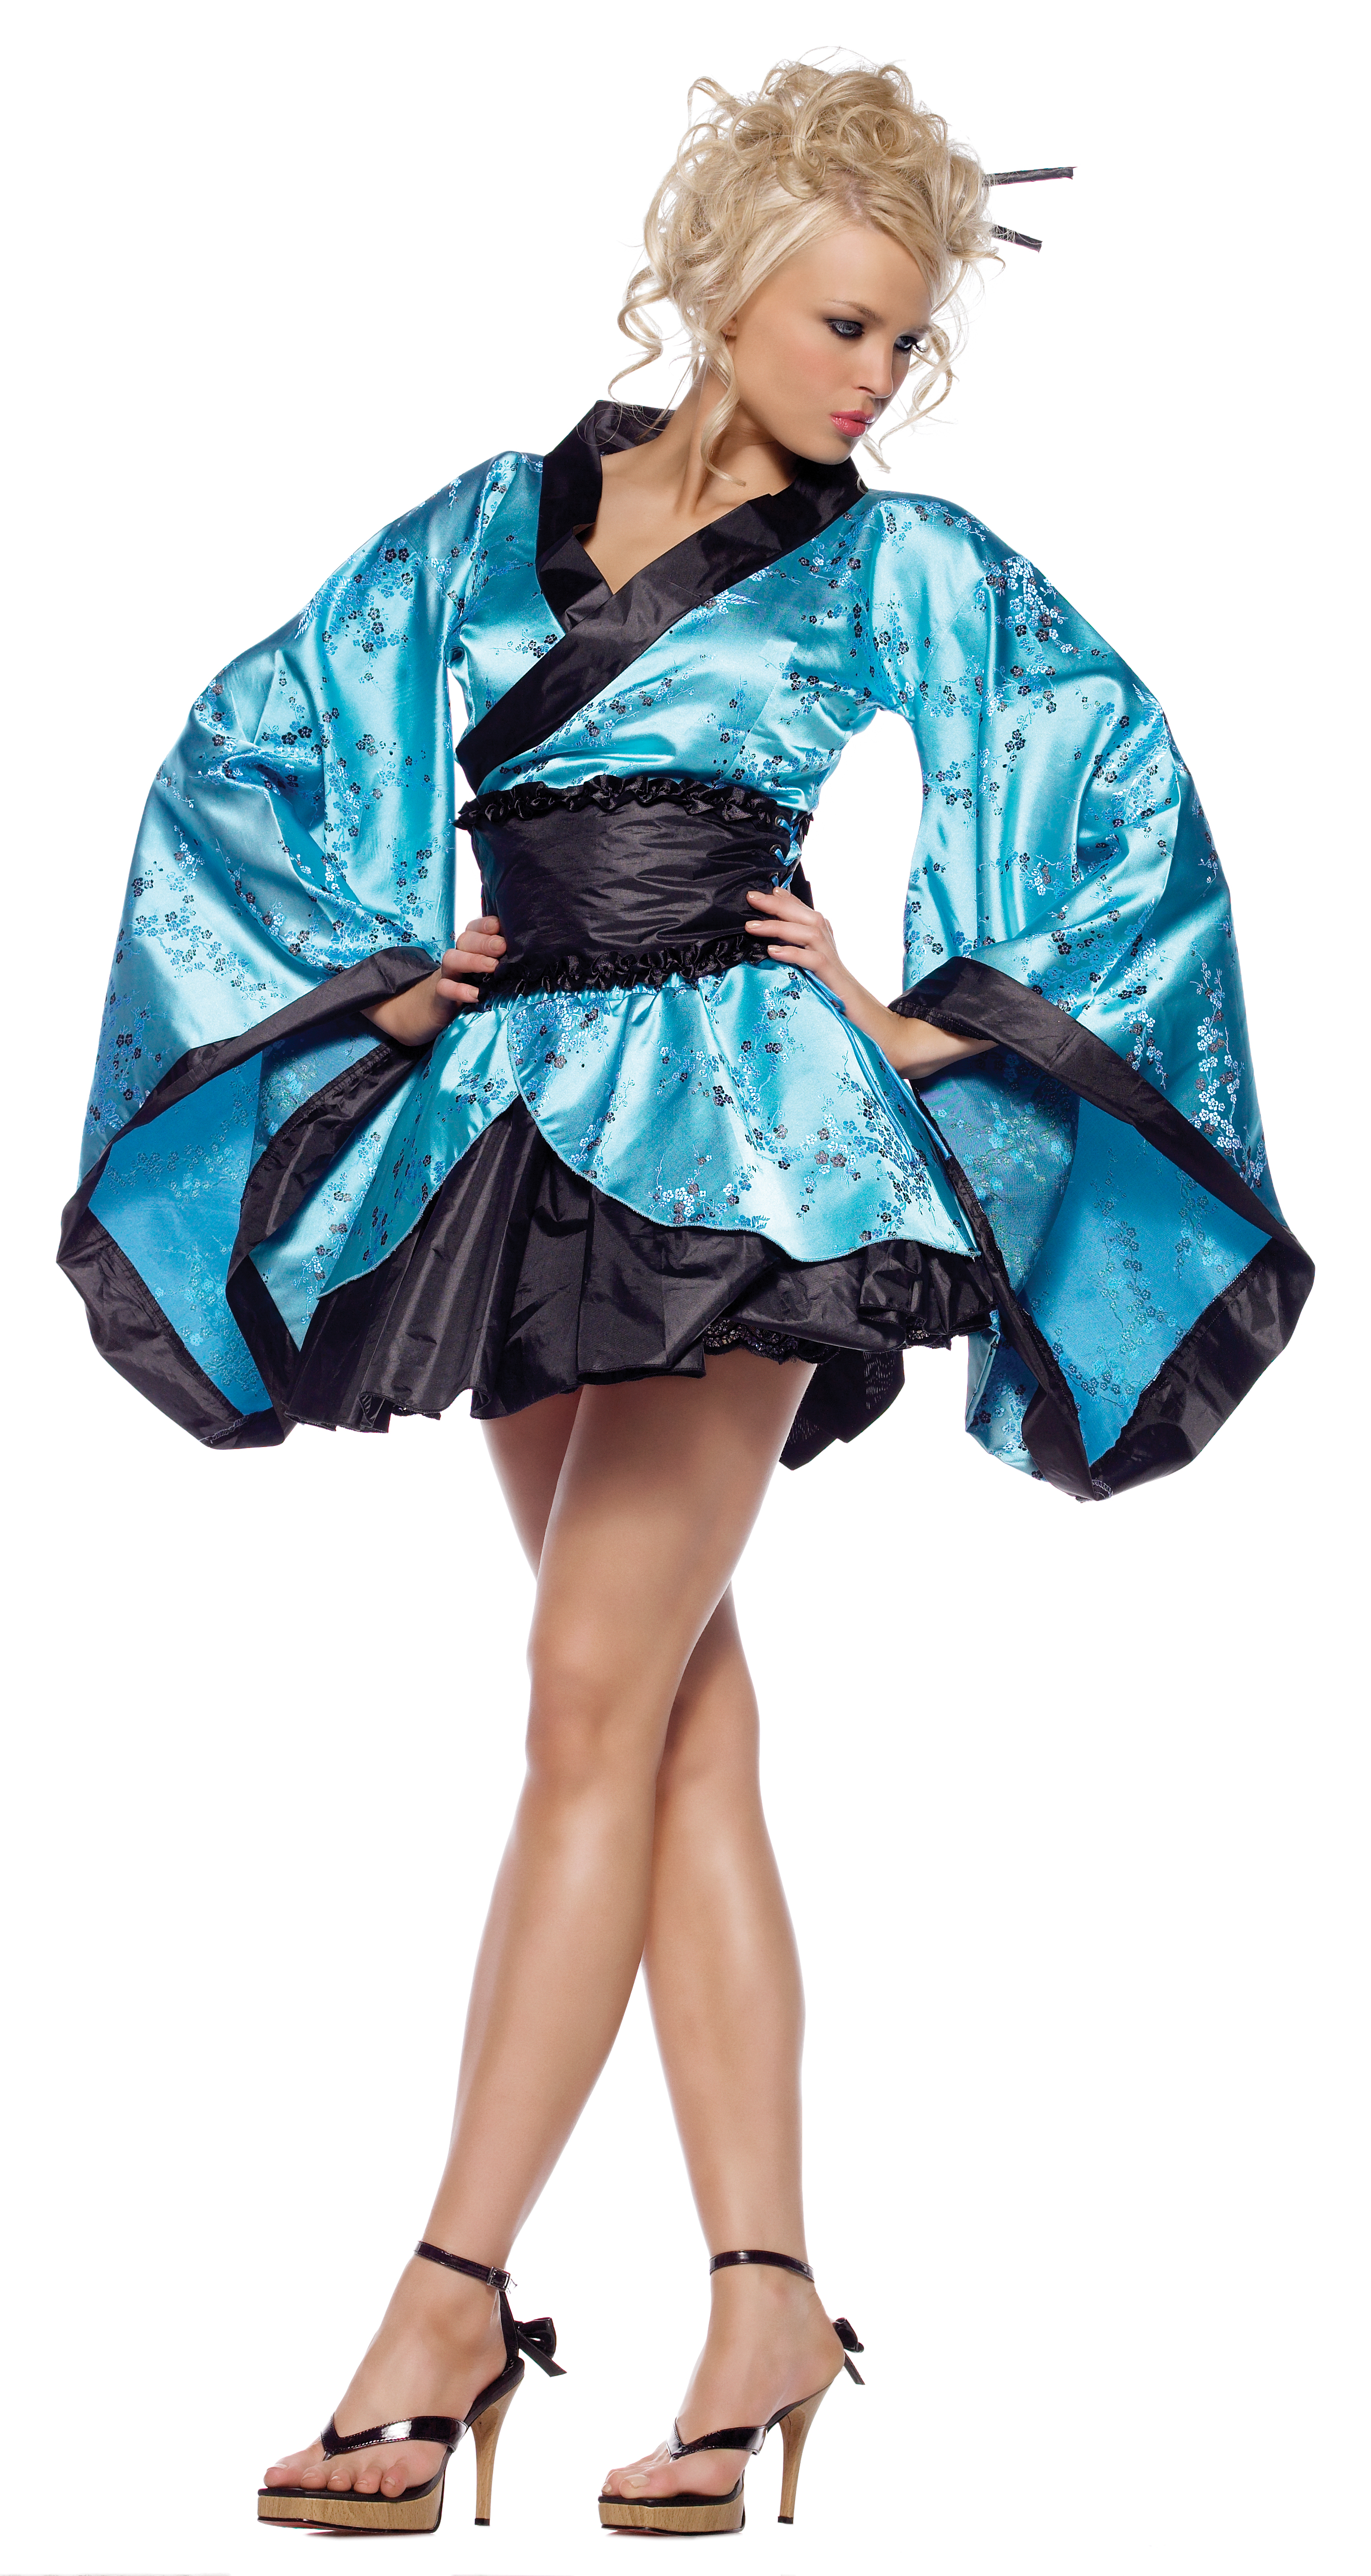 Leg Avenue Women's Lotus Geisha Adult Costume - Medium/Large